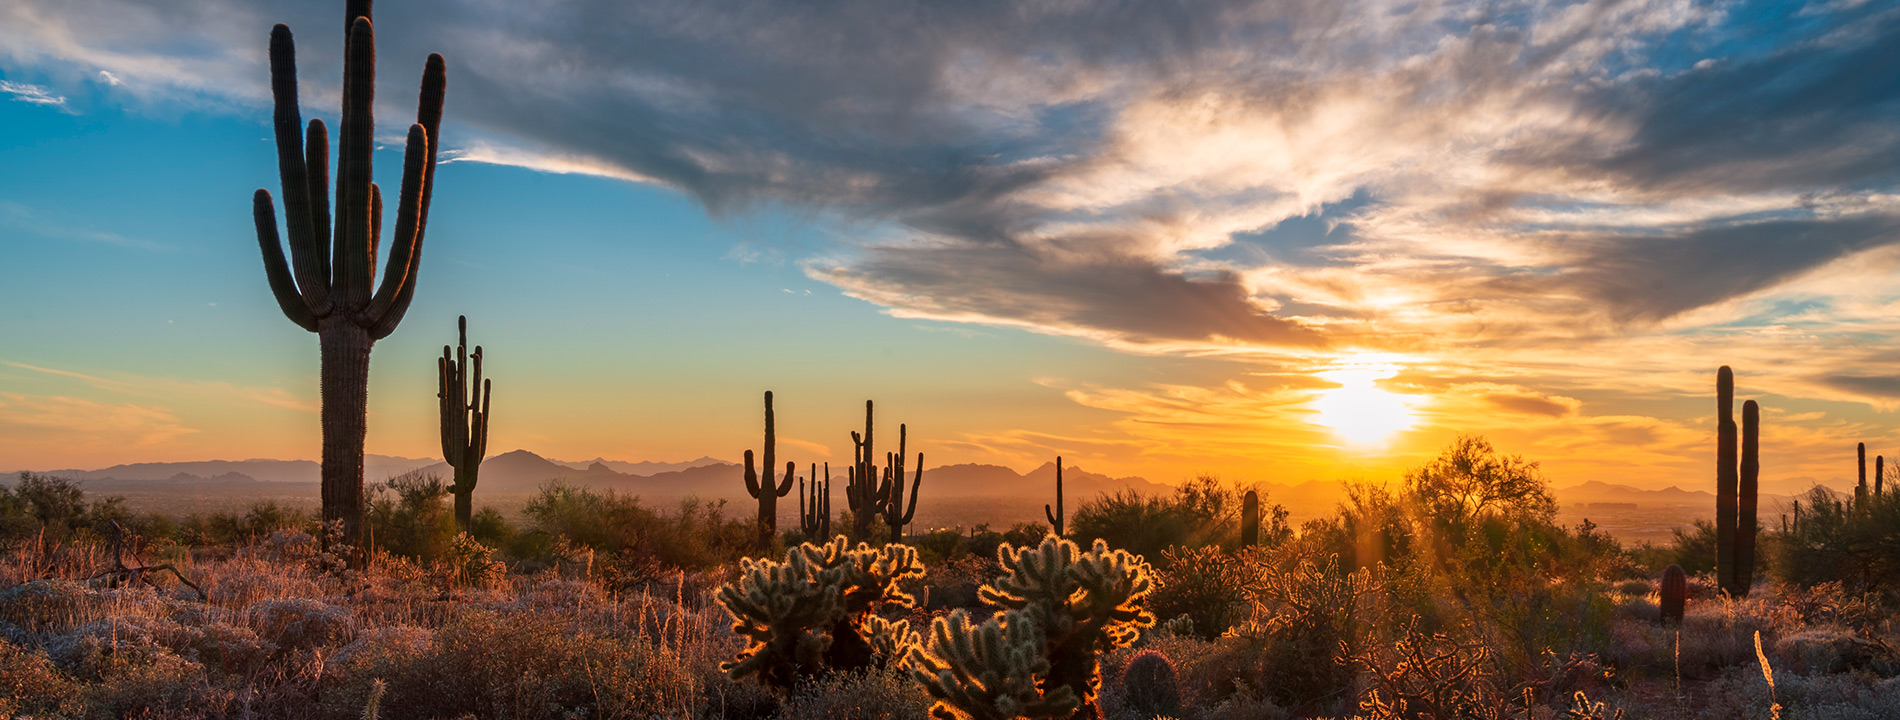 The sun is setting over the Arizona desert.